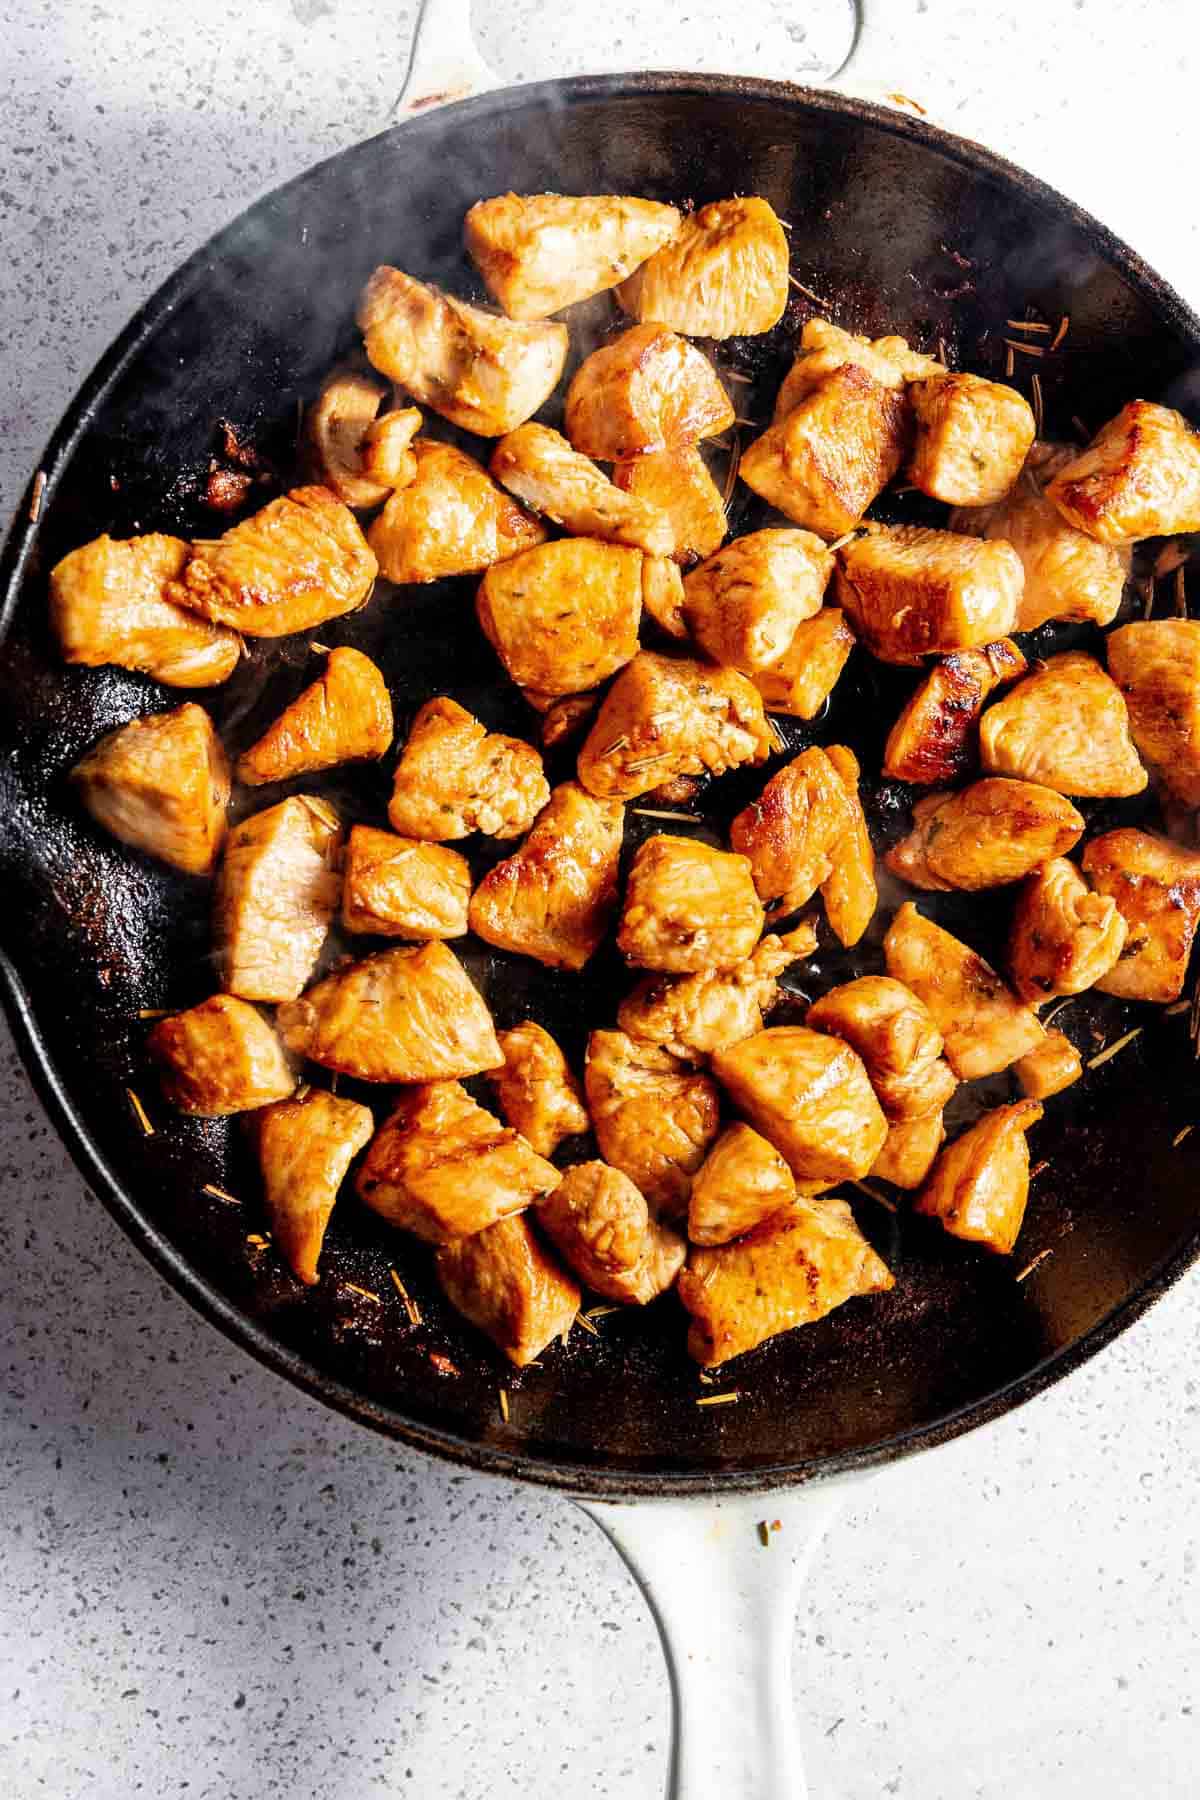 Fried chicken in a frying pan.